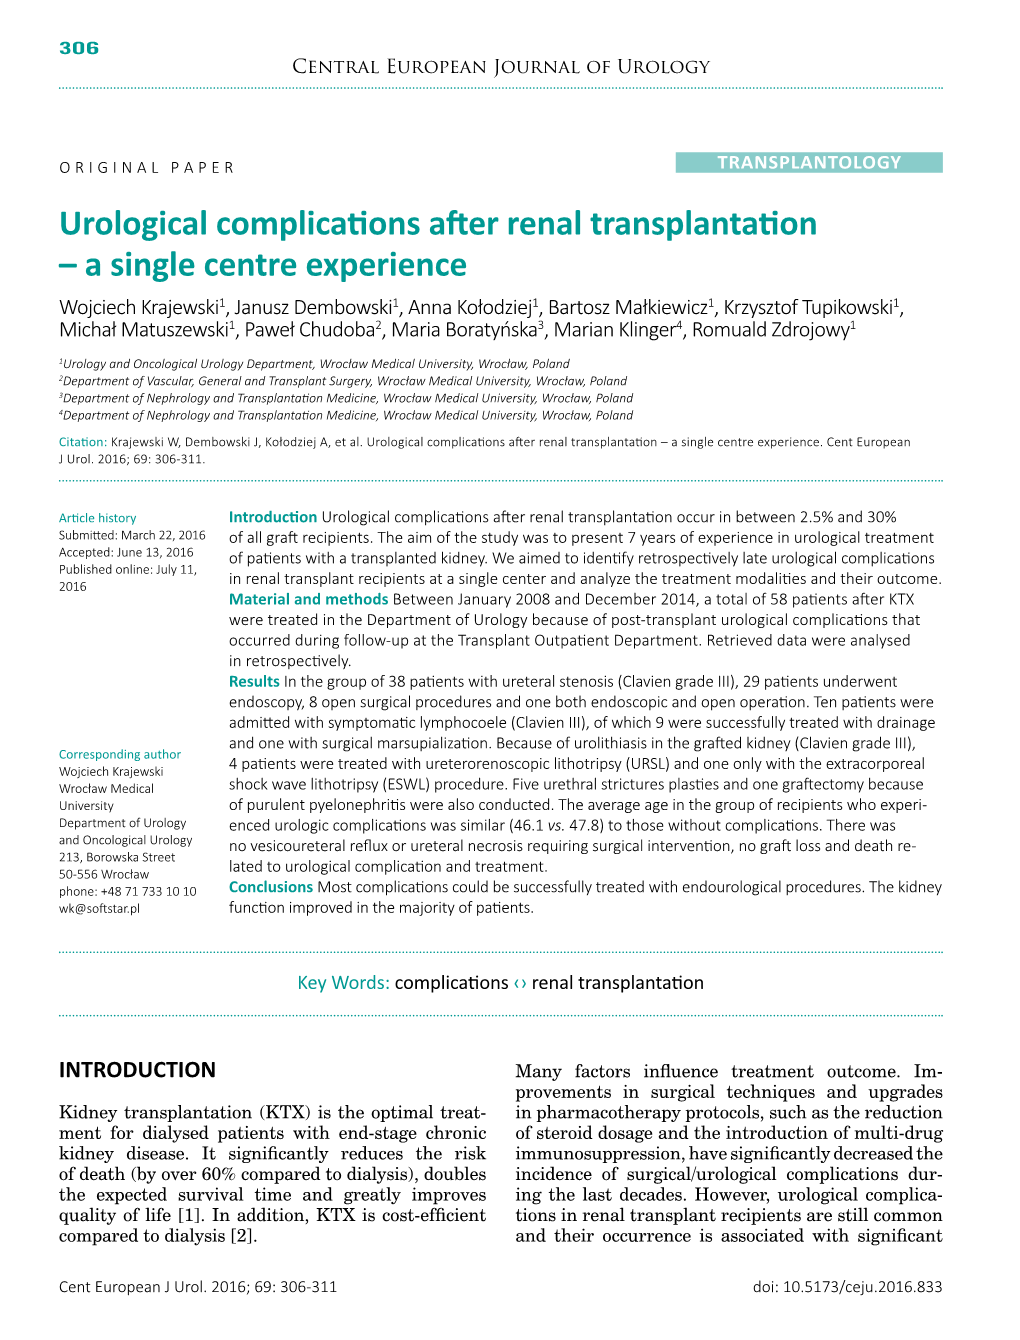 Urological Complications After Renal Transplantation